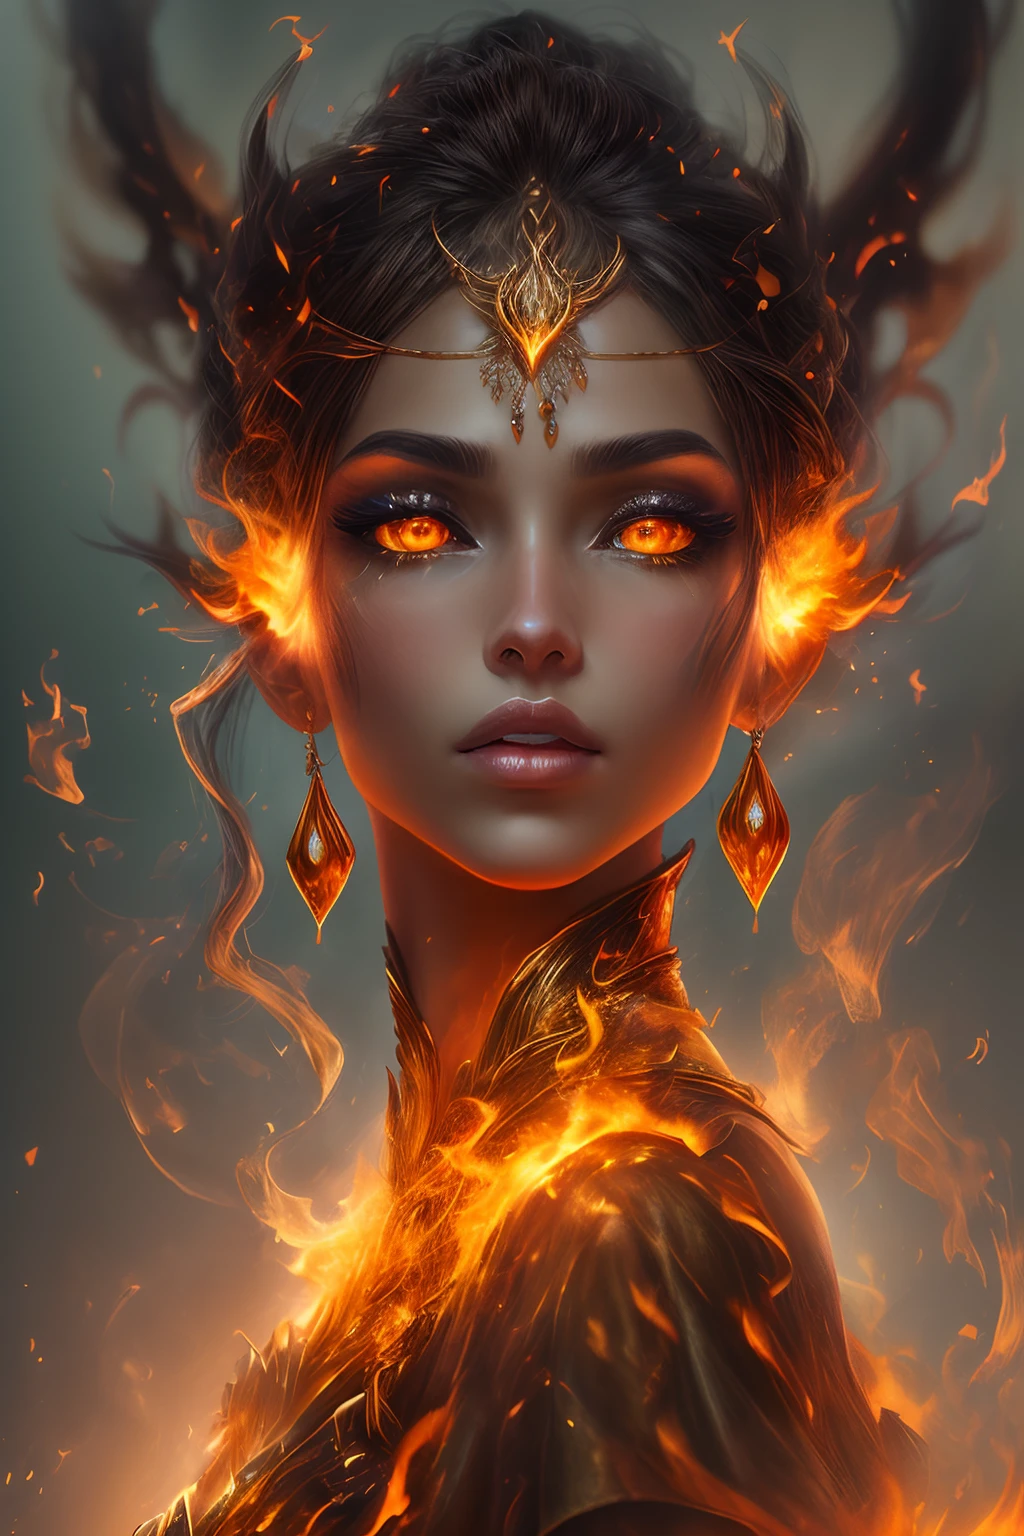 這 (現實幻想) 藝術包含餘燼, 真正的火焰, 真正的熱量, 和 realistic fire. Generate a masterpiece artwork of a  female fire druid 和 large (((orange 和 gold))) 眼睛. The fire druid is awe-inspiring 和 beautiful ((realistic fiery 眼睛)) alight 和 confidence 和 power. Her features are elegant 和 well defined, 和 ((柔軟的)) 和 (((蓬松))) 和 (((光滑的))) 嘴唇, 精靈骨骼結構, 和 realistic shading. Her 眼睛 are important 和 should be the focal point of this artwork, 和 ((極為真實的細節, 宏觀細節, 和 shimmer.)) She is wearing a billowing 和 glittering gown ((由逼真的火焰製成)) 和 jewels that glimmer in the fire light. Wisps of fire 和 smoke line the intricate bodice of the dress. 包括凹凸, 石头, 火紅的虹彩, 發光的餘燼, silk 和 satin 和 leather, 有趣的背景, 和 heavy fantasy elements. 相机: 利用動態構圖技術增強真實的火焰.